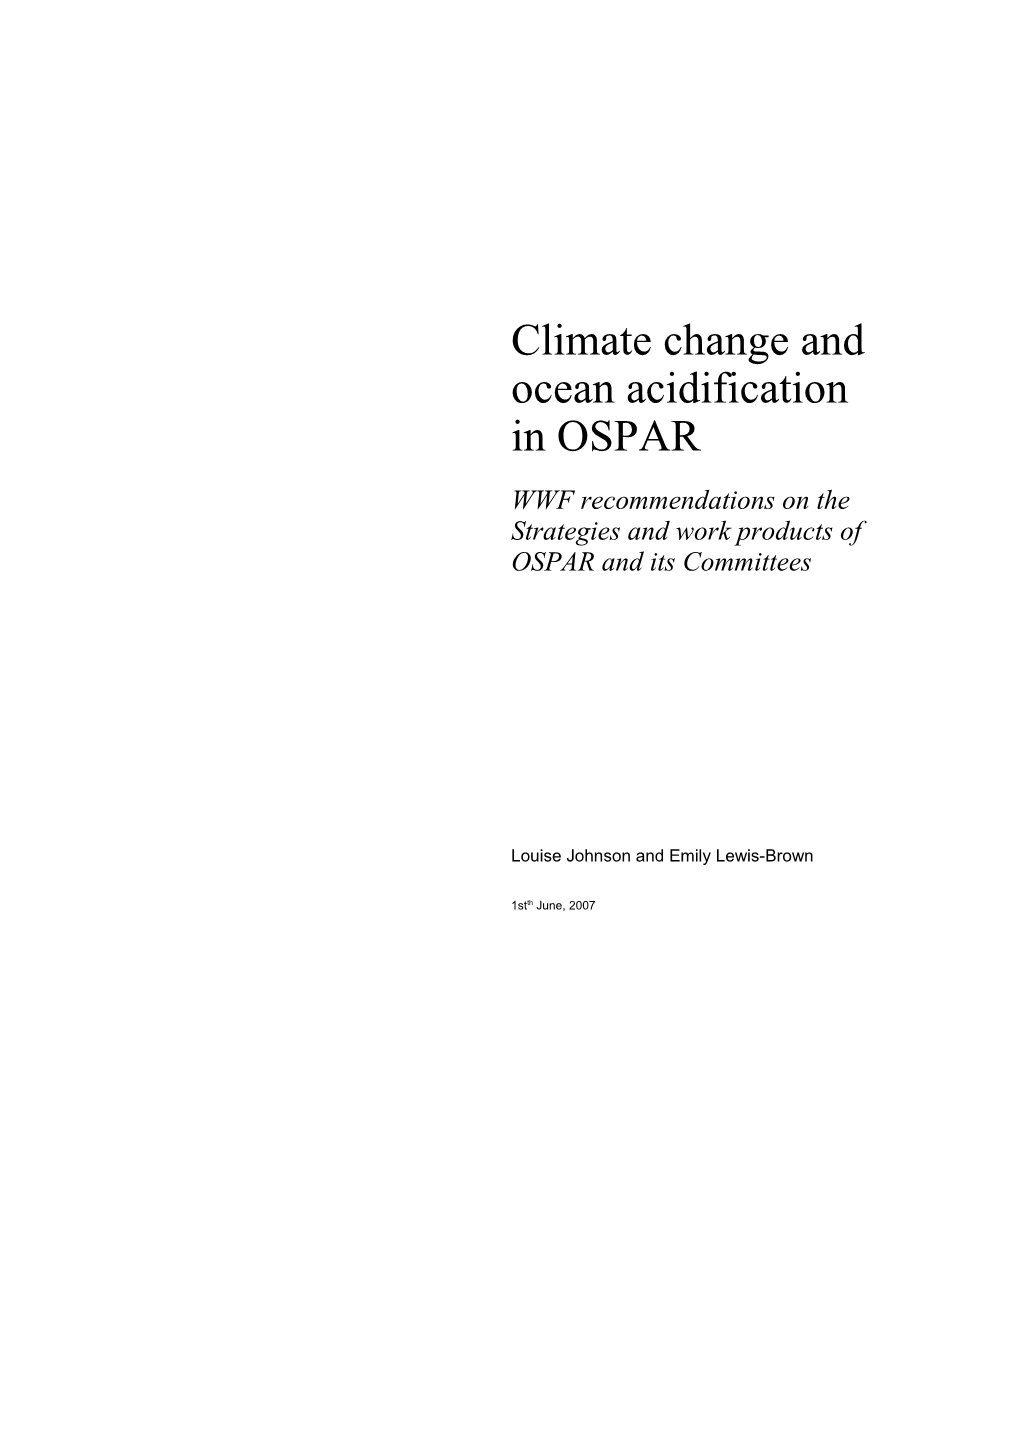 OSPAR Climate Change and Ocean Acidification